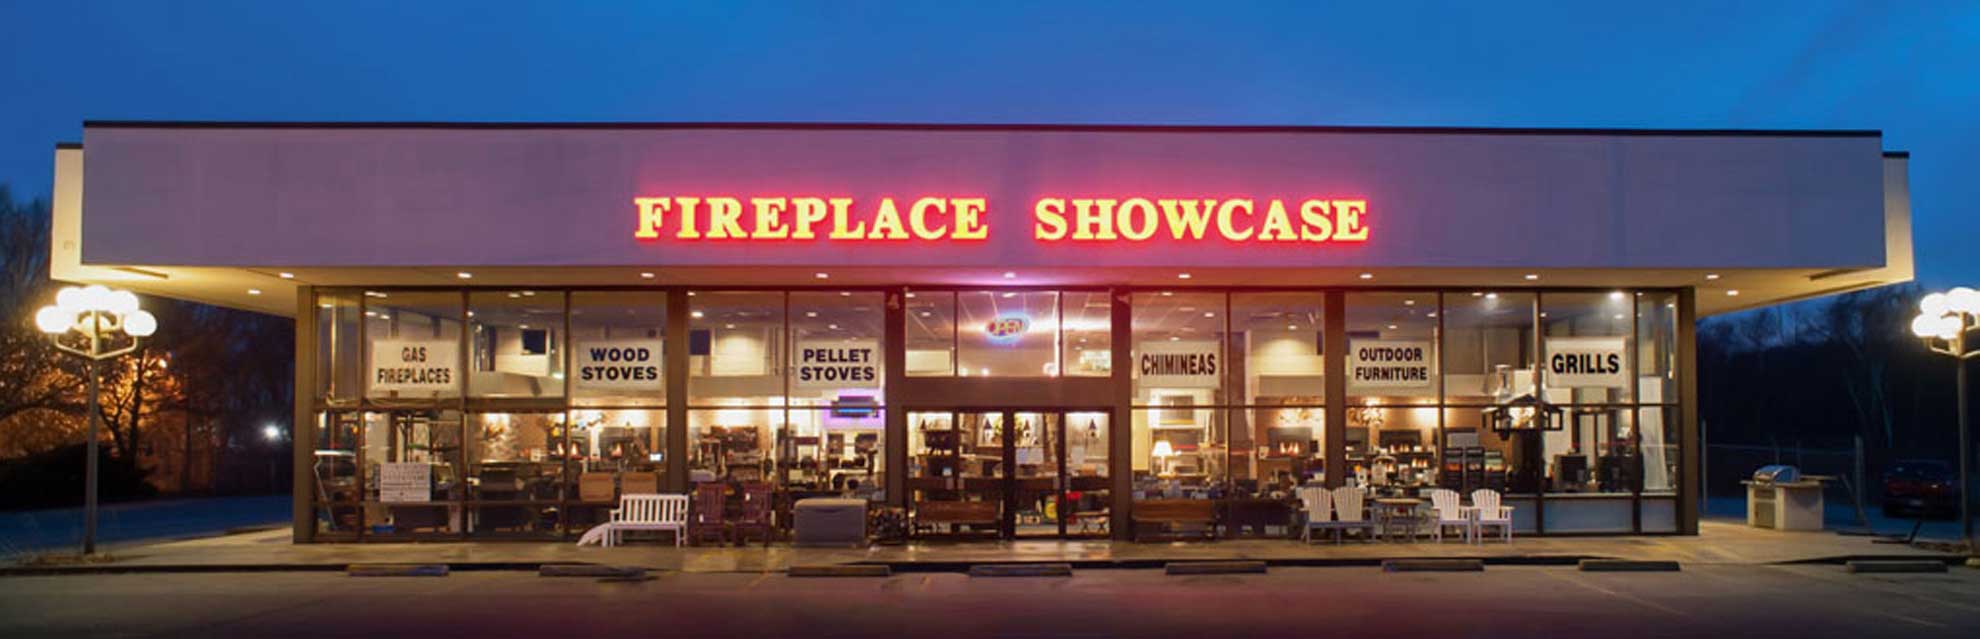 The Fireplace Showcase Showroom